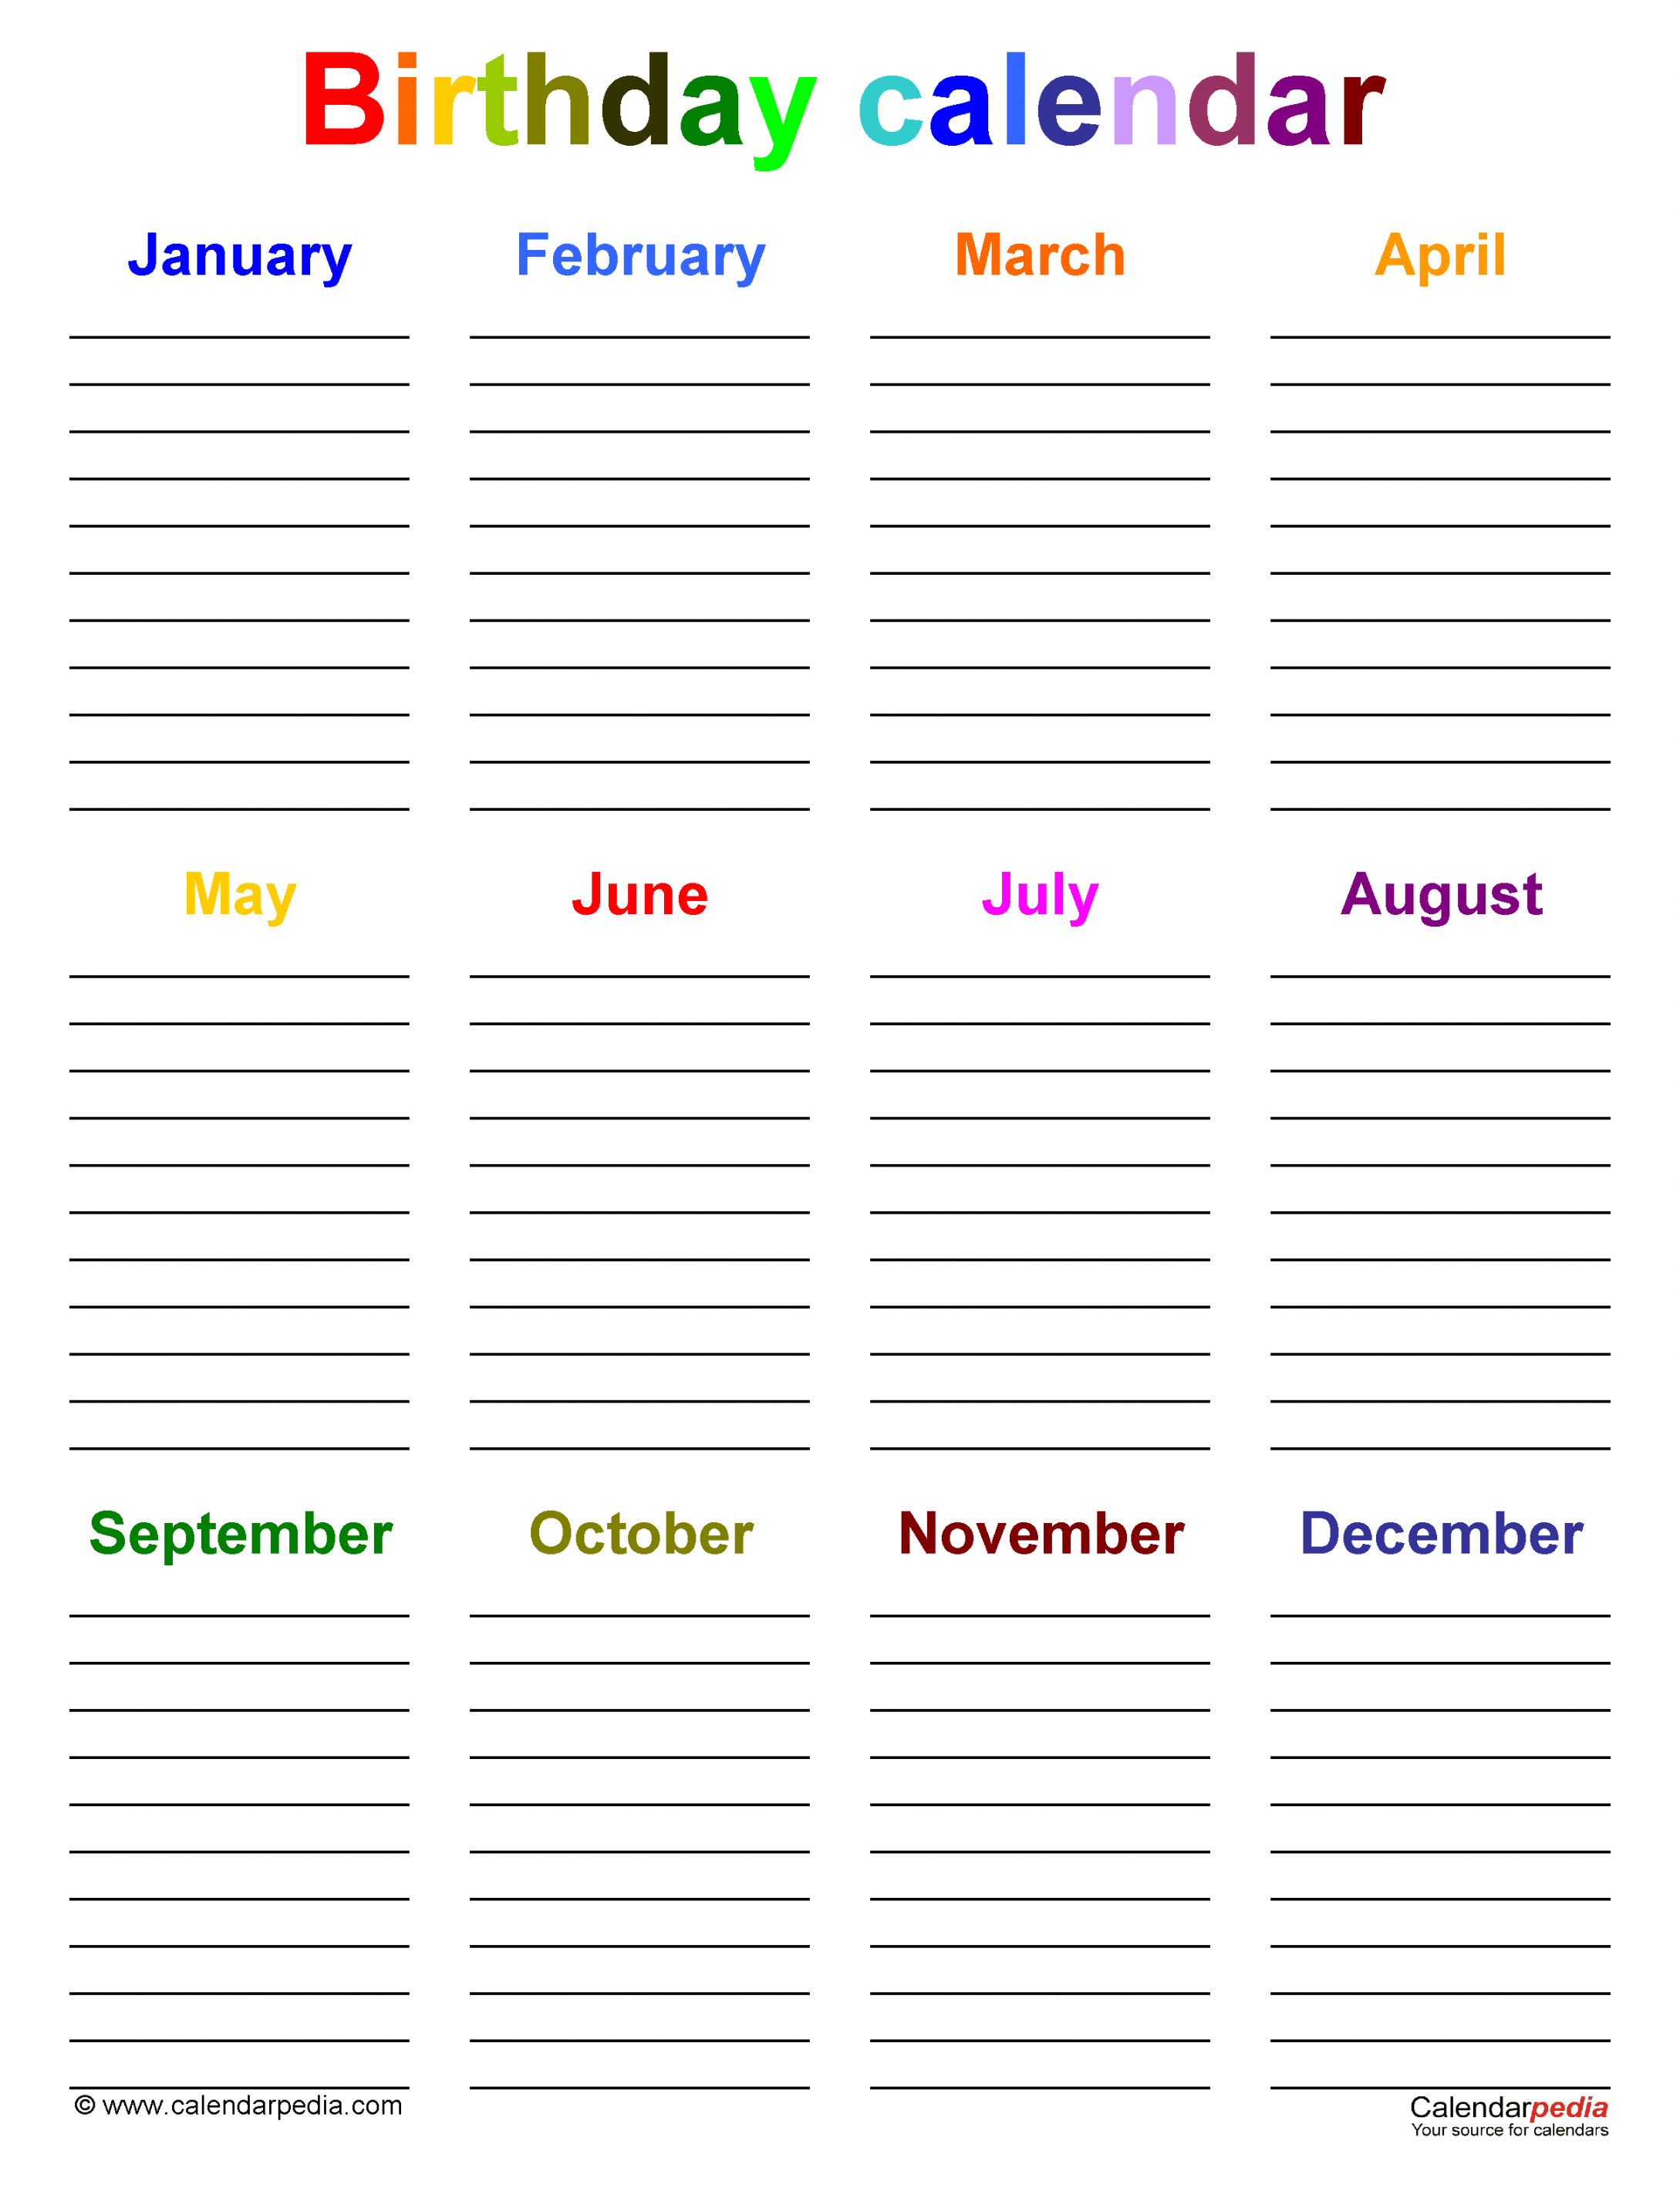 Birthday calendars - Free Printable PDF templates - FREE Printables - Free Printable Birthday Calendars